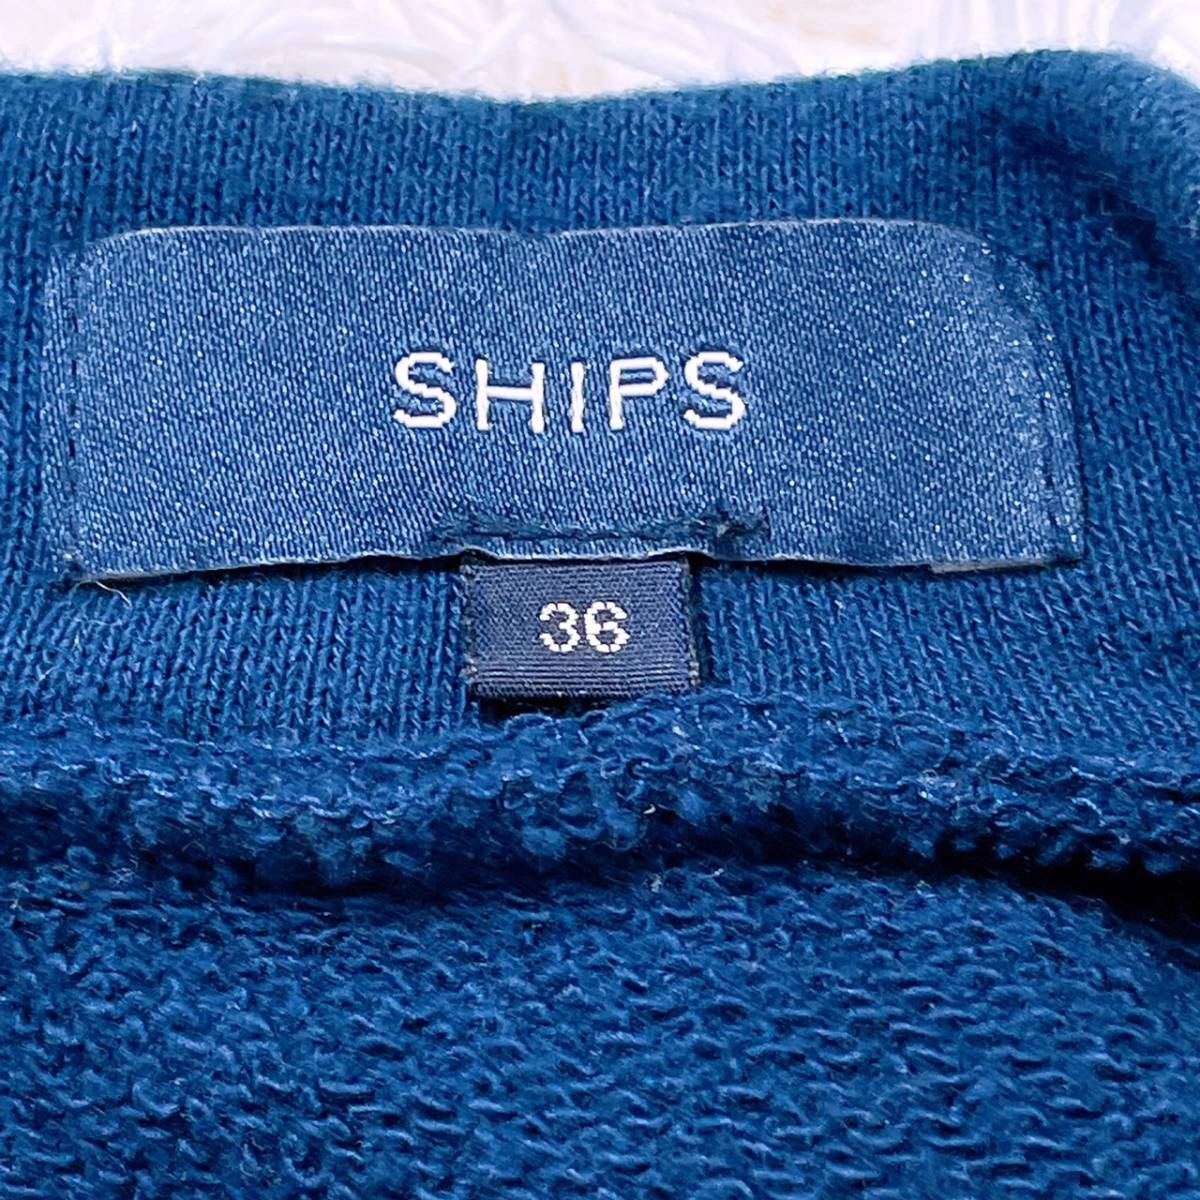 【20313】 SHIPS シップス トップス シャツ 長袖シャツ トレーナー 網目 バックファスナー 丸ネック 秋冬用 ブルー 青 36 S